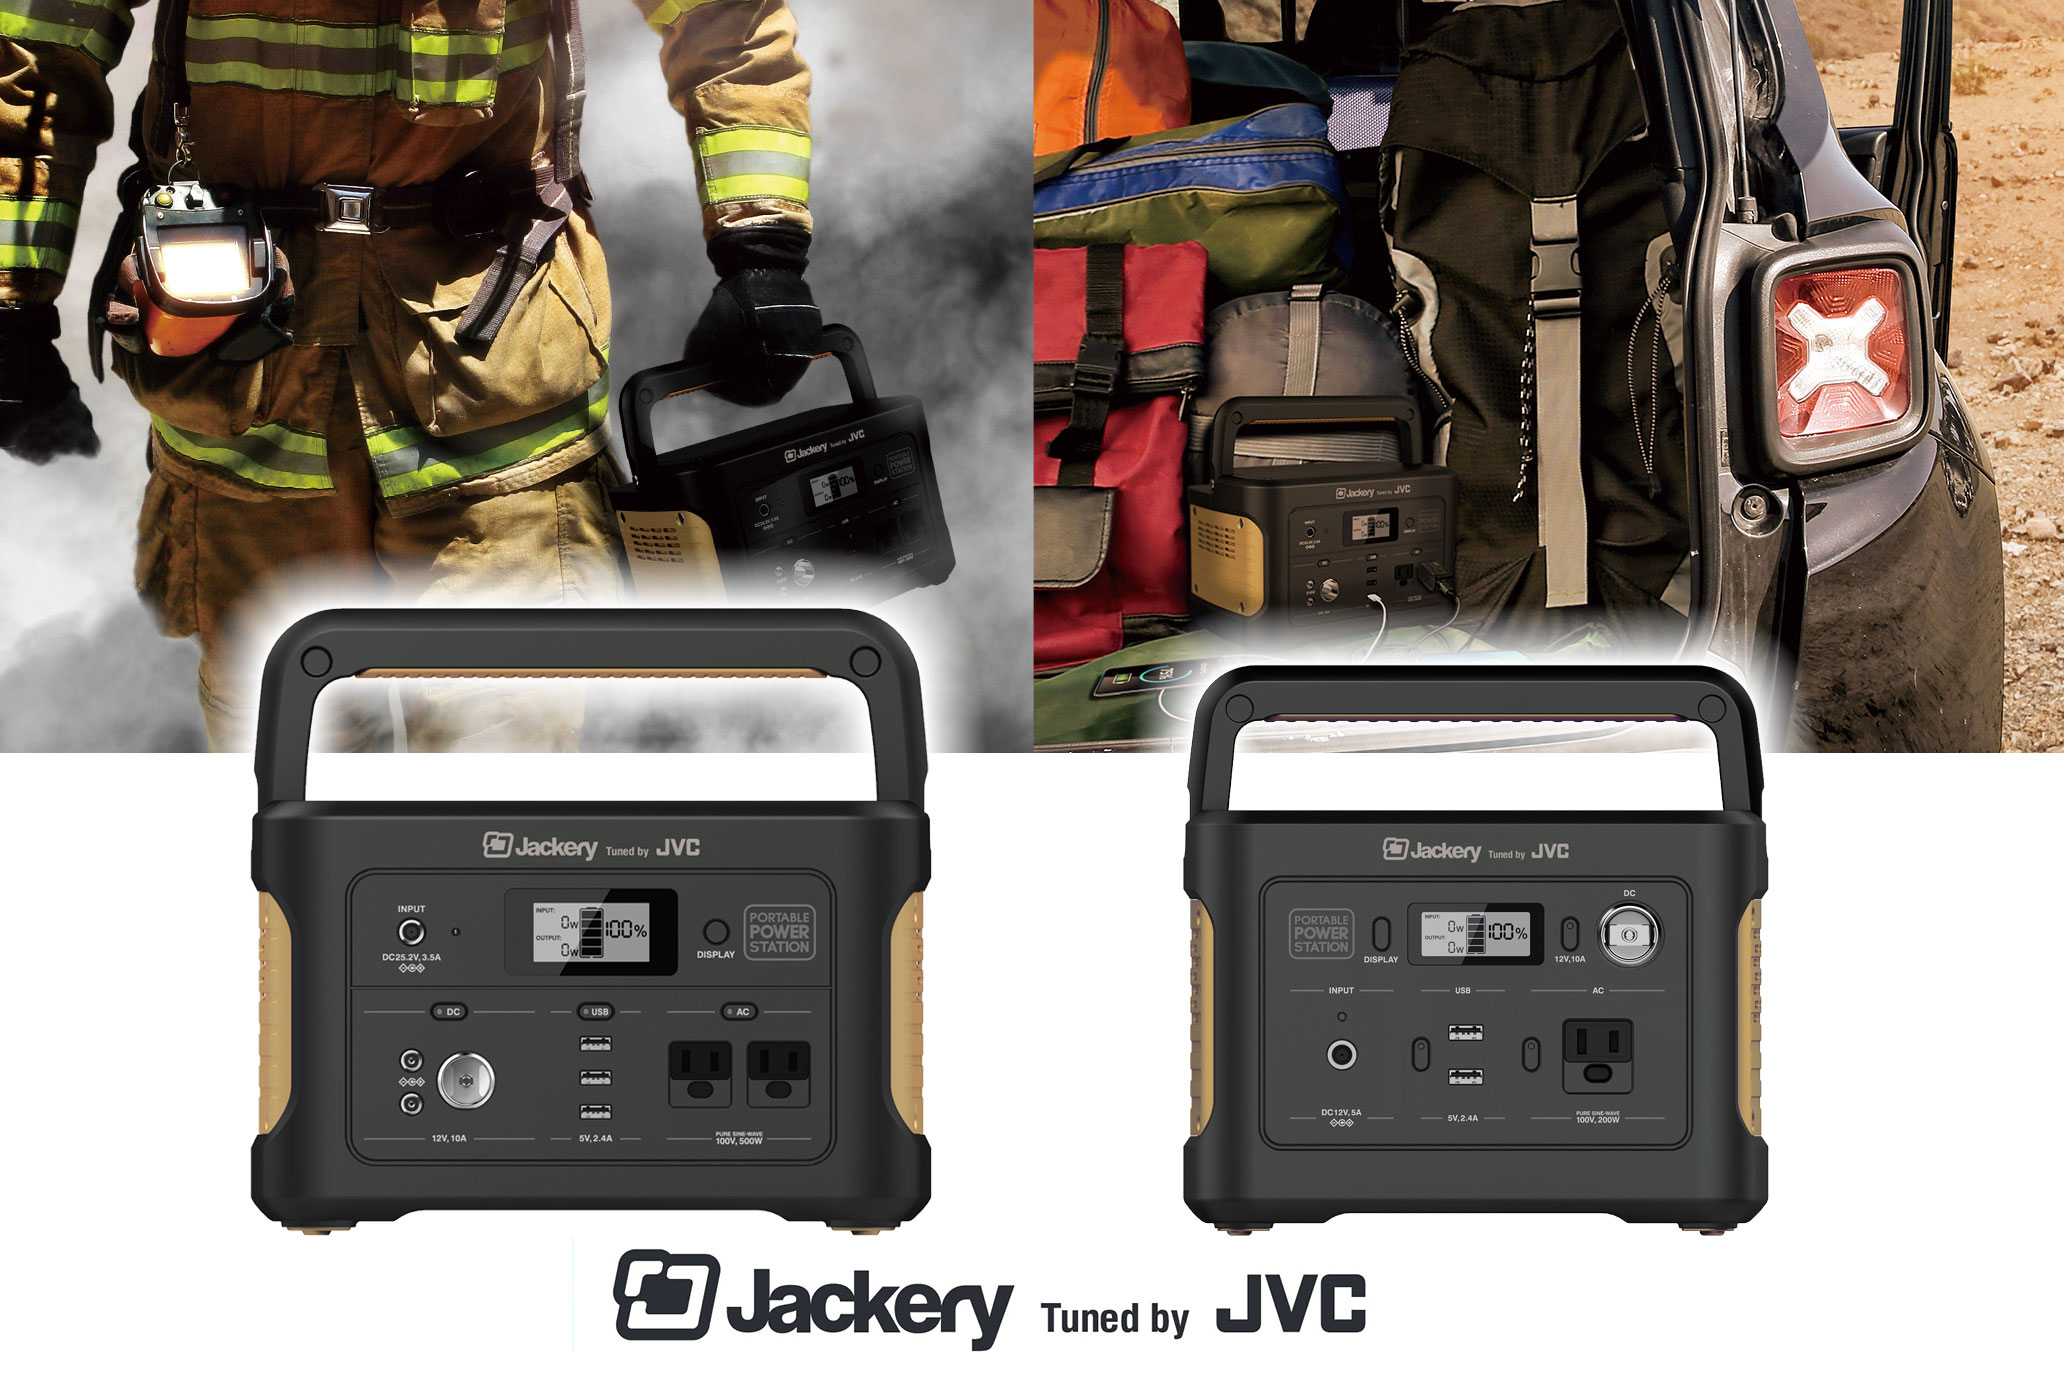 JVCケンウッド、“ポータブル電源”のJackeryと業務提携。商品を共同開発 